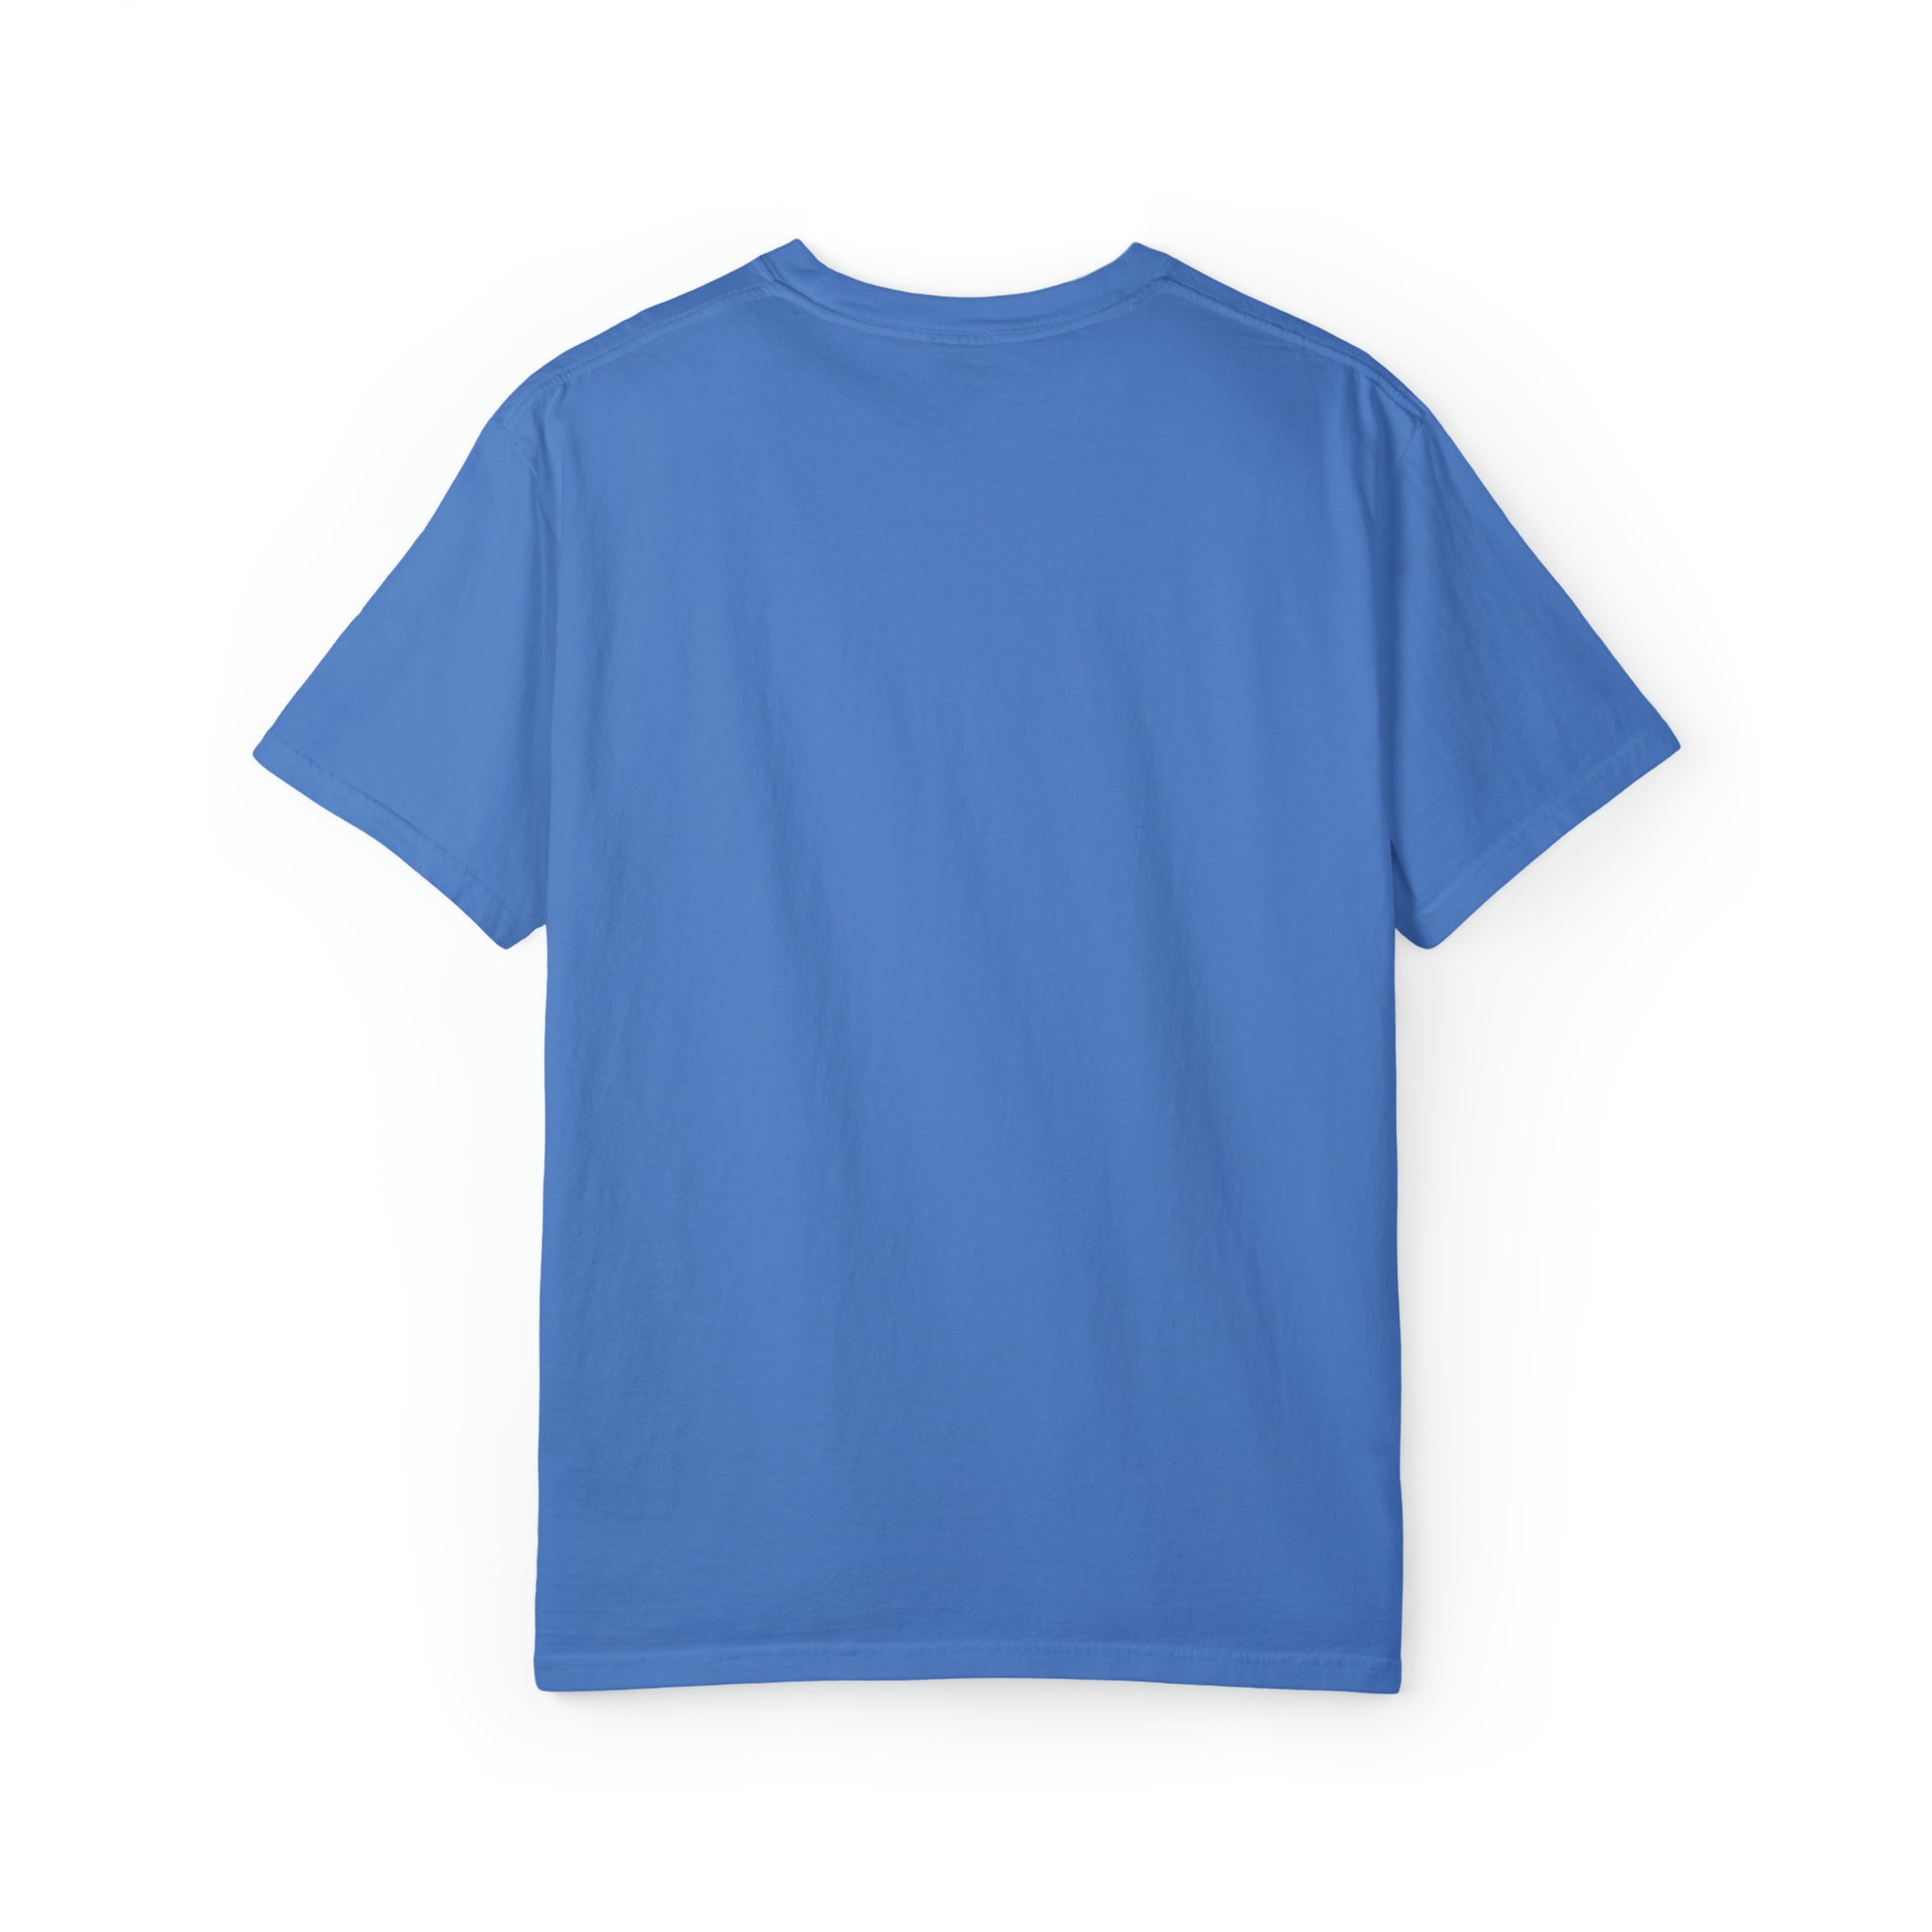 Blind Archer Unisex T-shirt - Variation 1